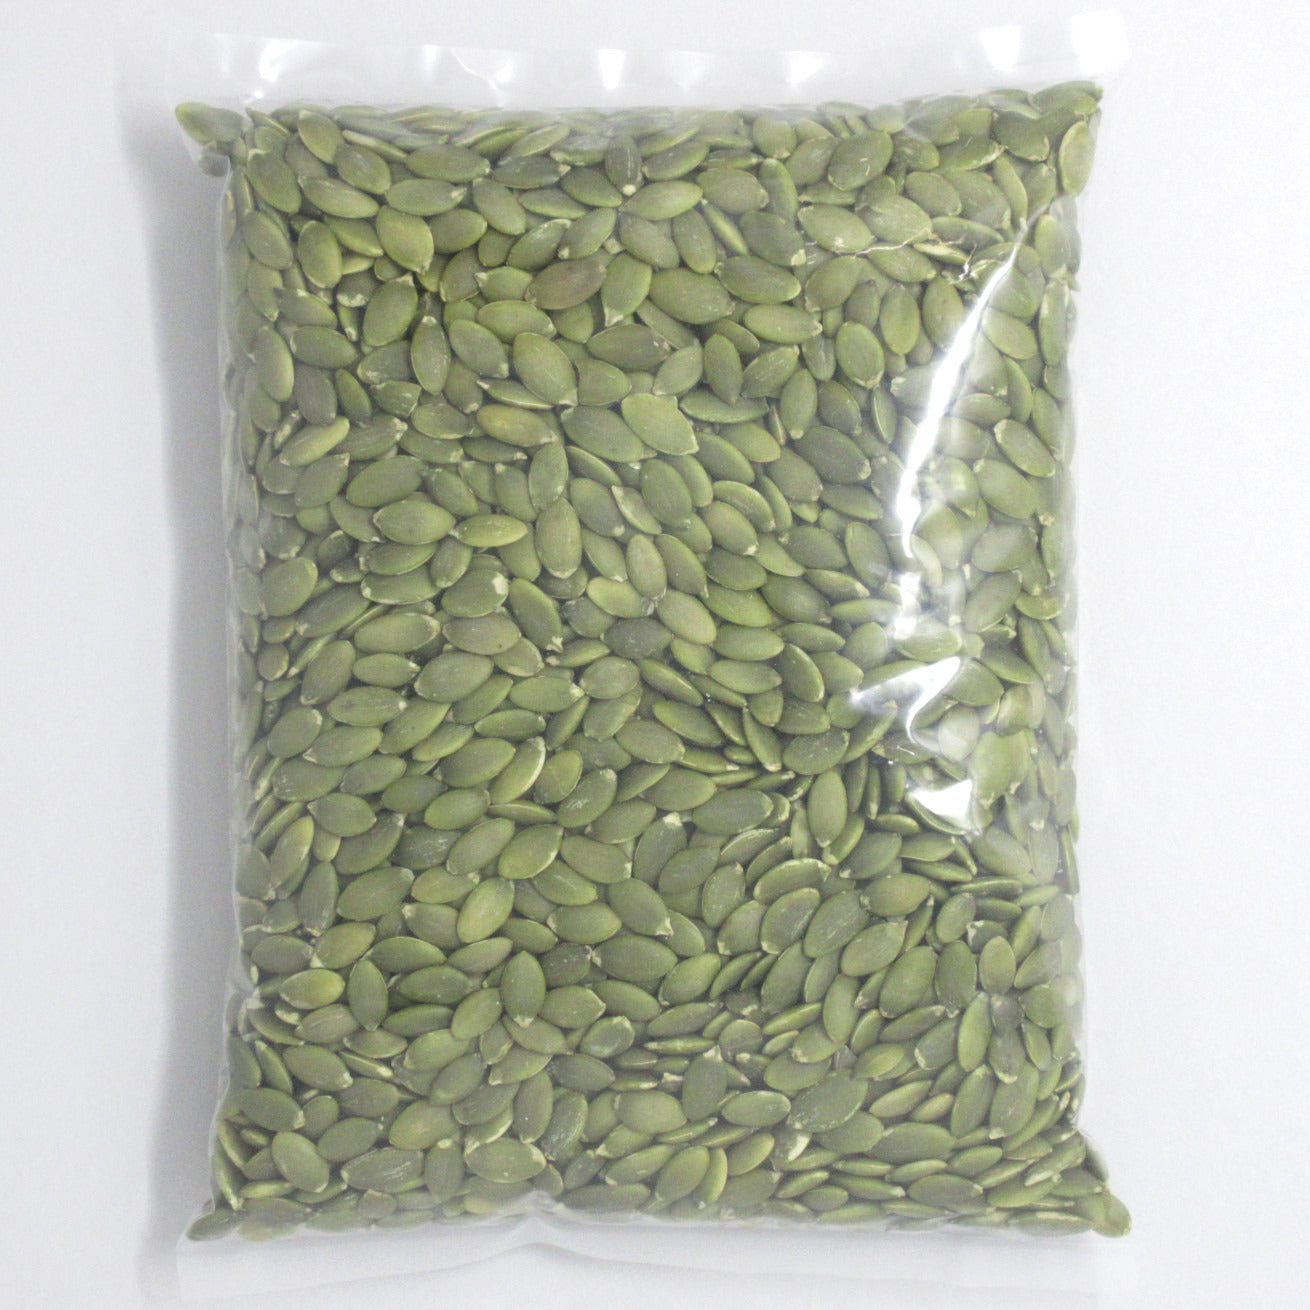 Flour Barrel product image - Pepita Seeds